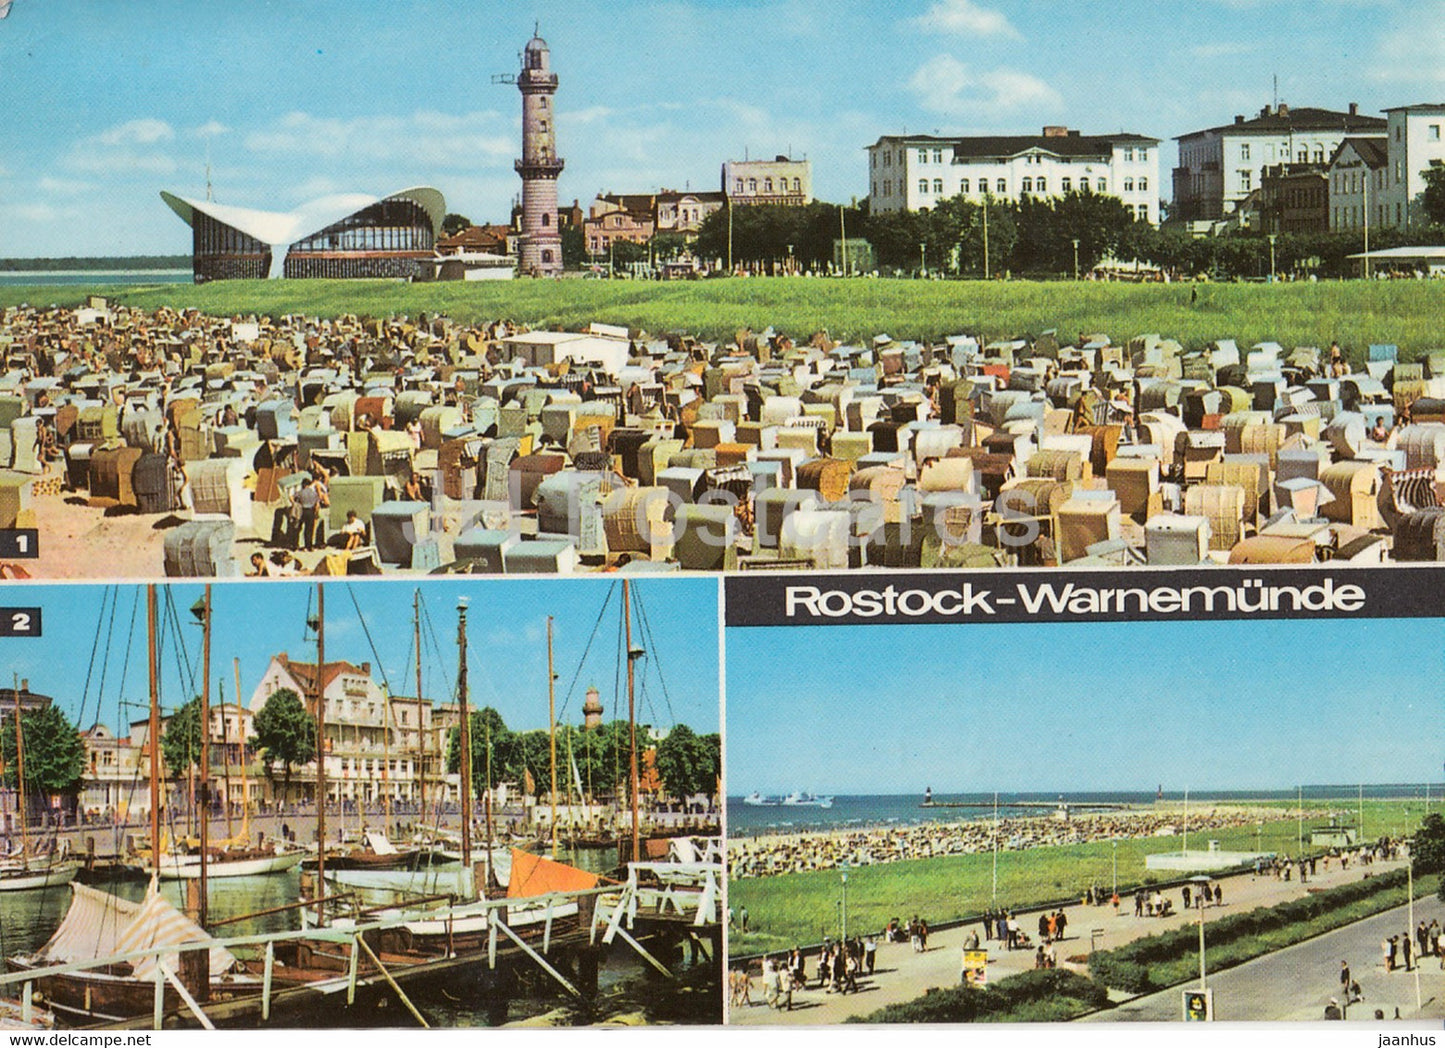 Rostock - Warnemunde - Strand mit Gaststatte Teepott und Leuchtturm - beach - lighthouse - 1970 - Germany DDR - used - JH Postcards